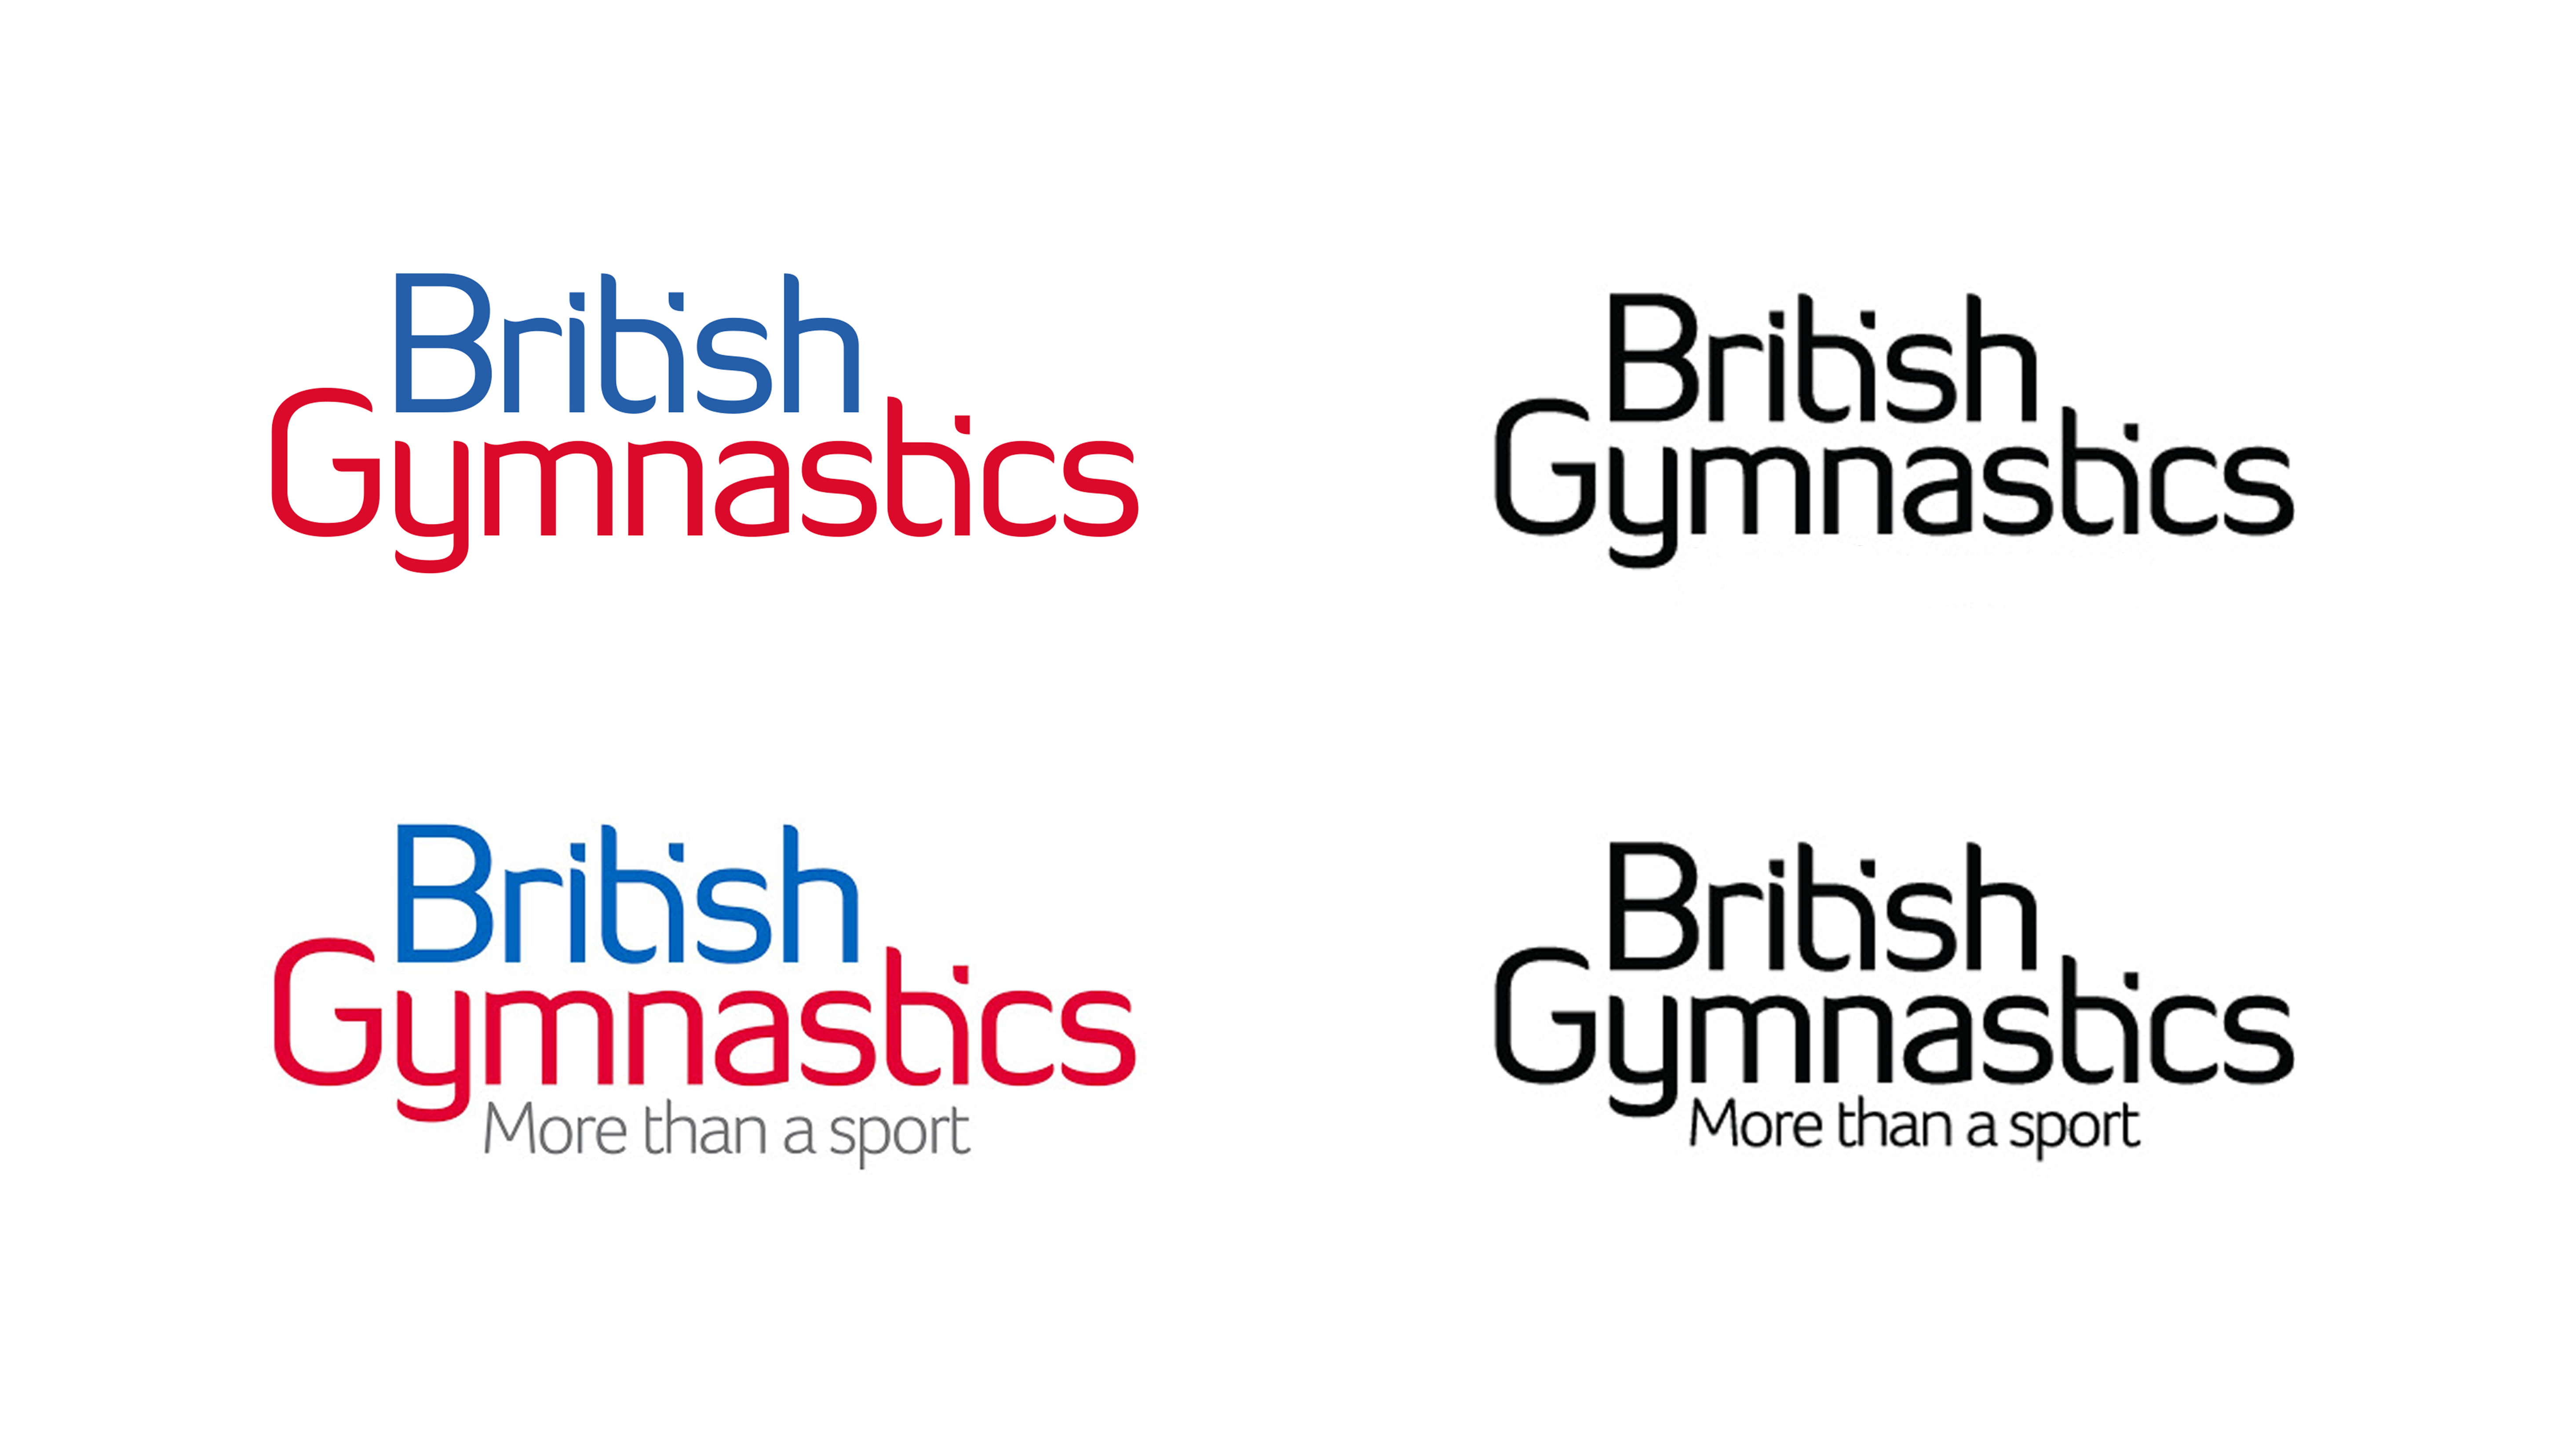 British Gymnastics logos